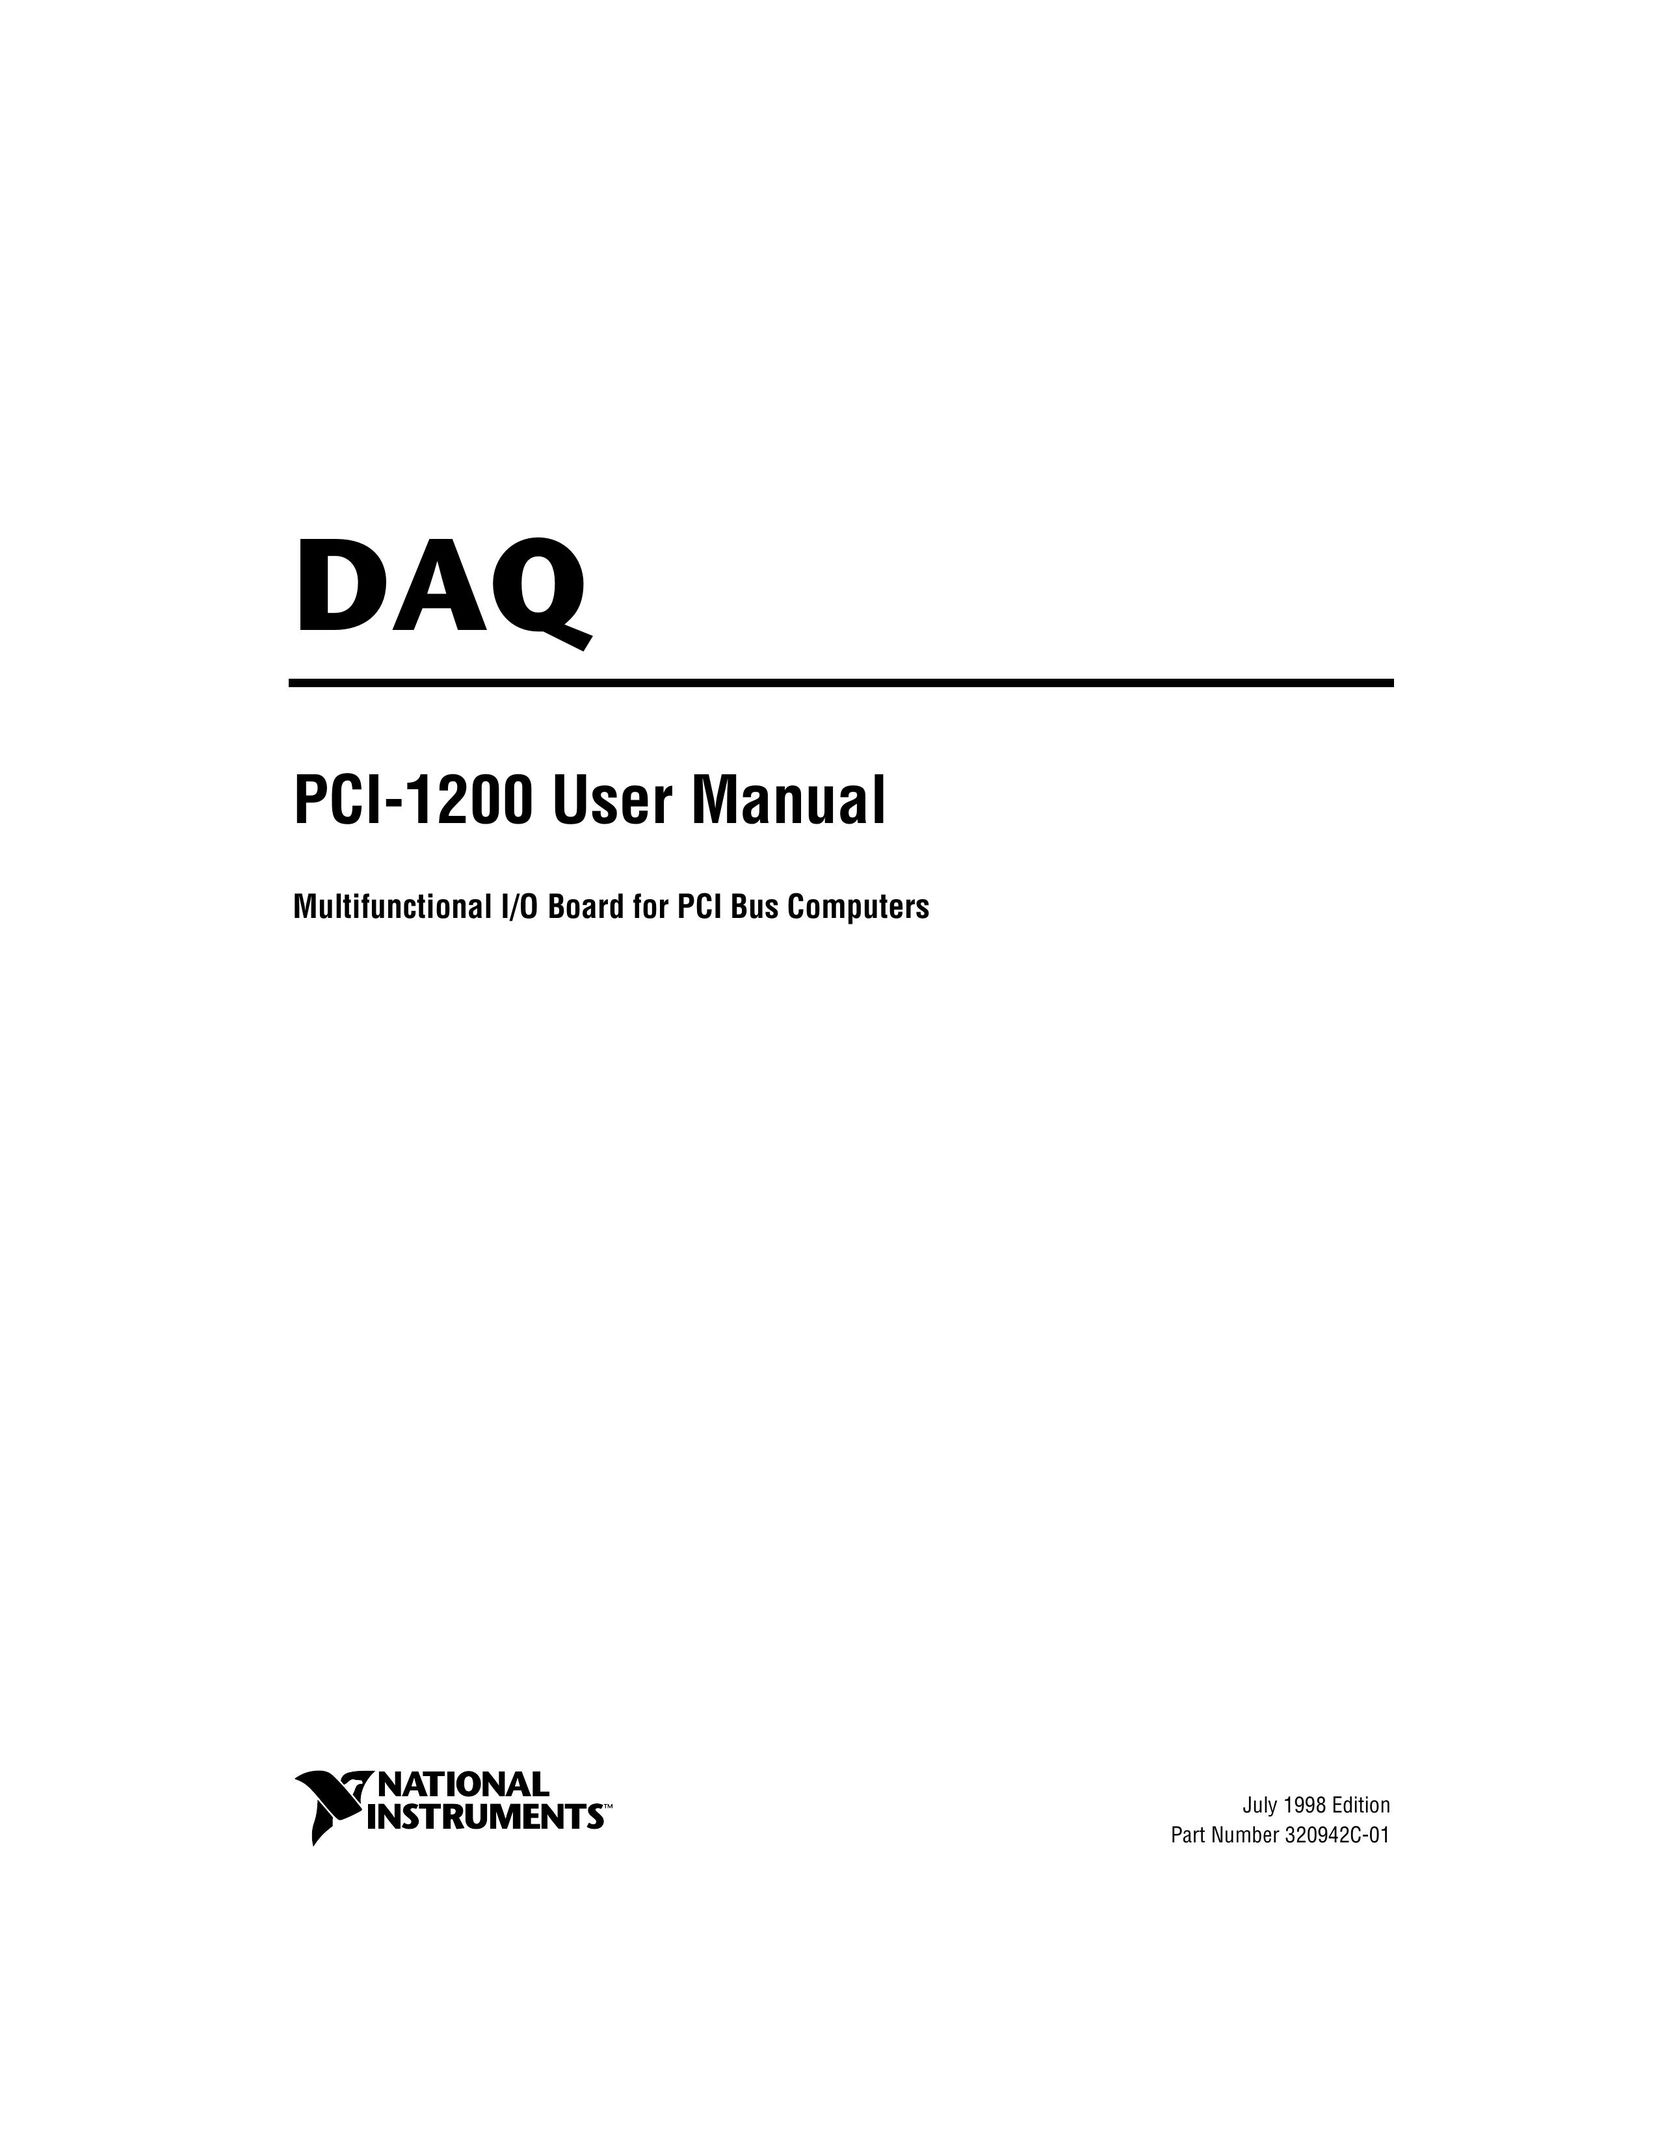 National Instruments PCI-1200 Computer Hardware User Manual